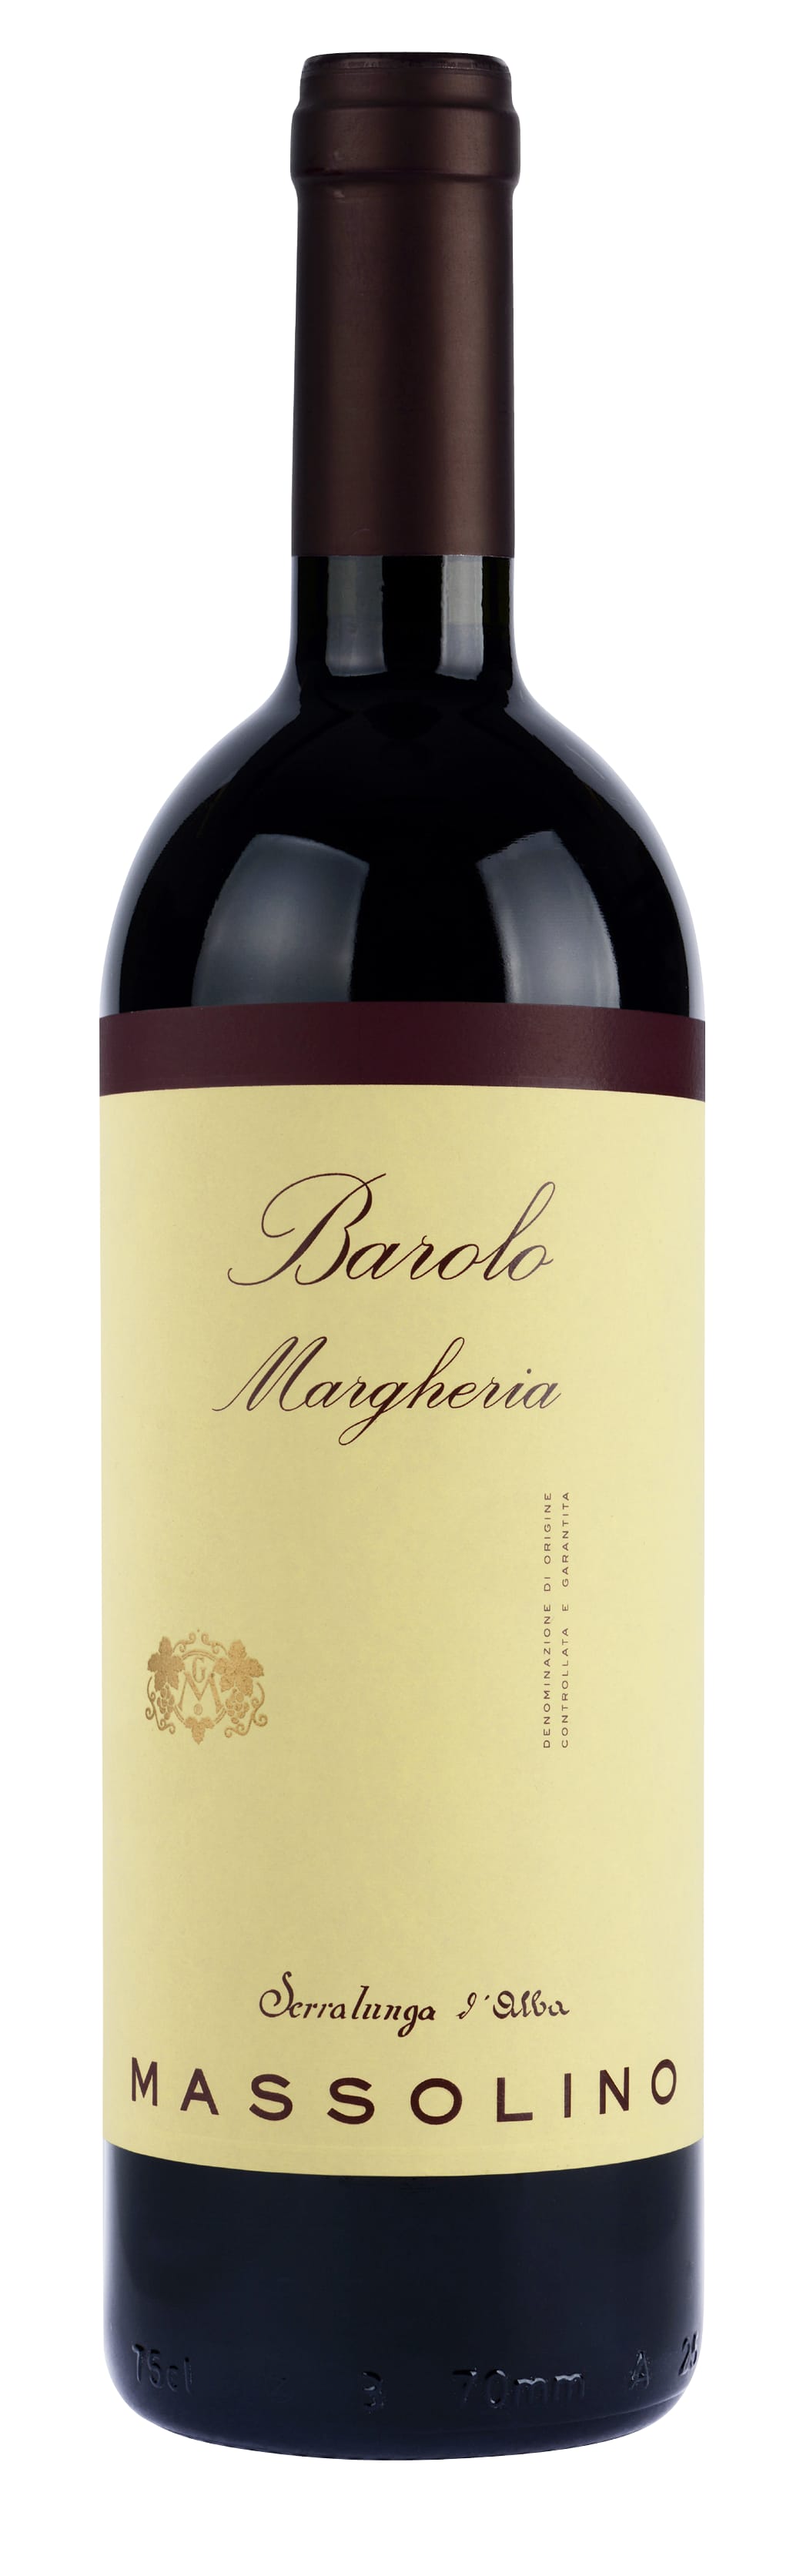 Massolino - Barolo Margheria 2019 (750)